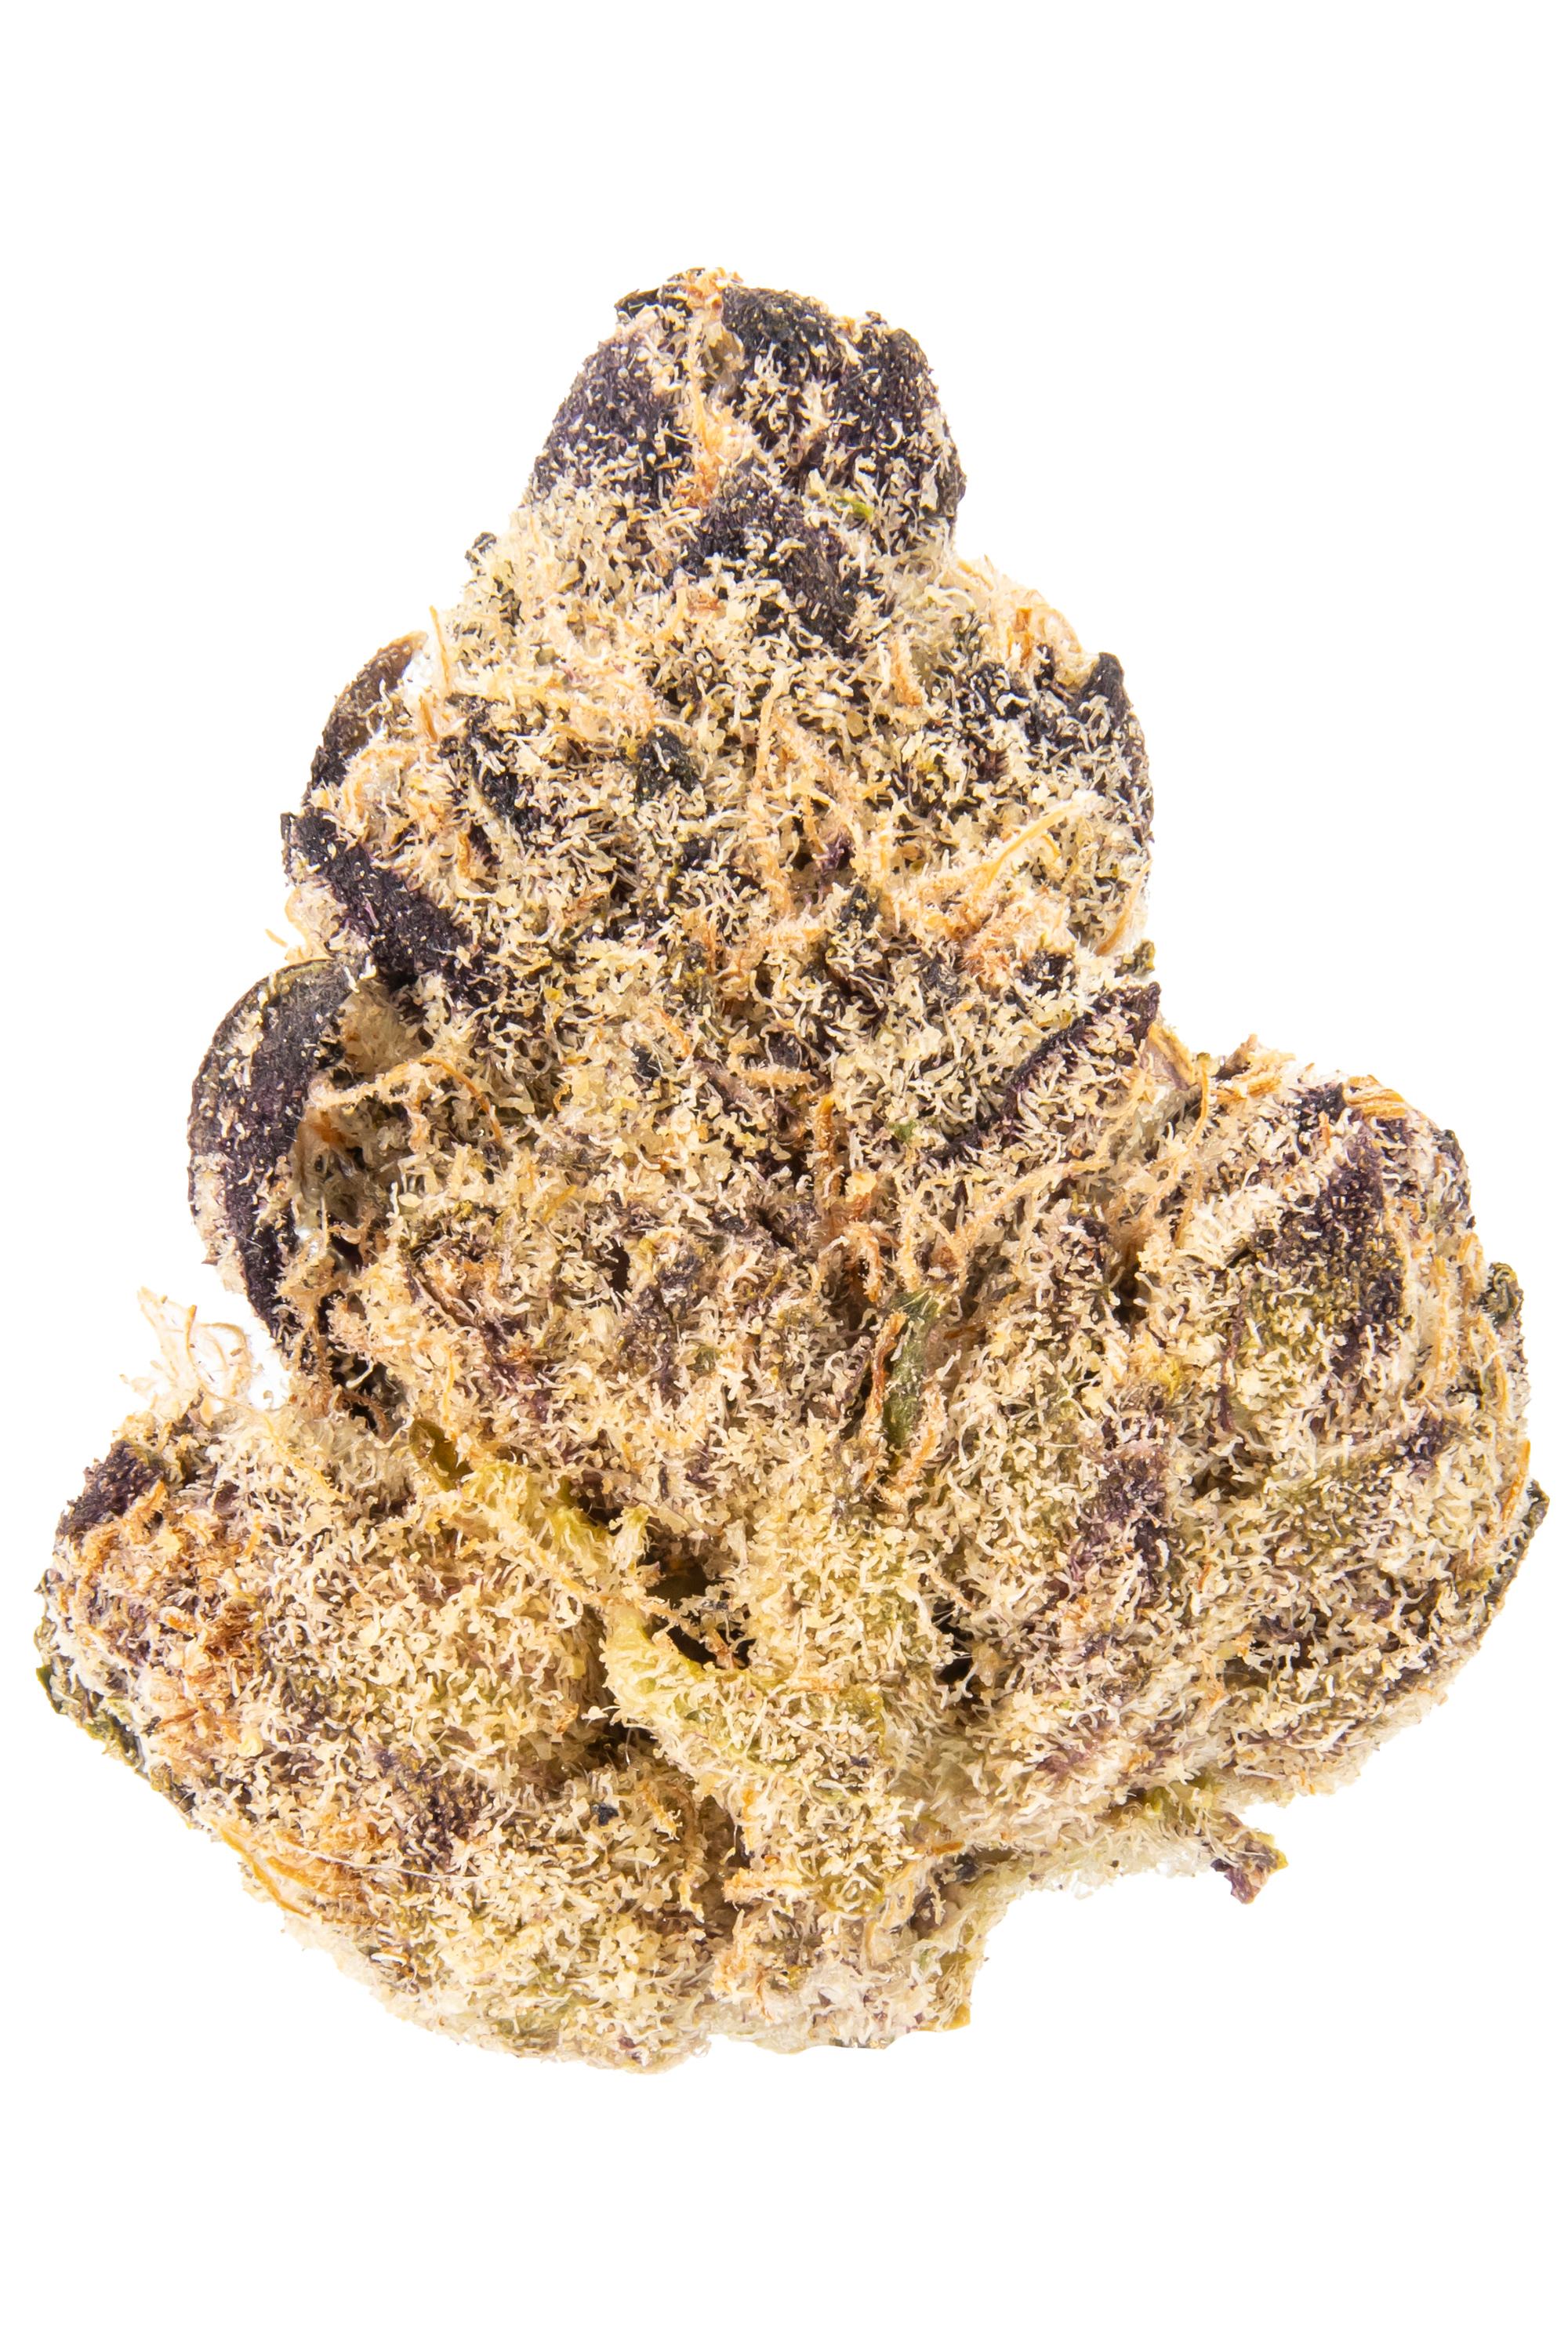 Sudz - Hybrid Cannabis Strain